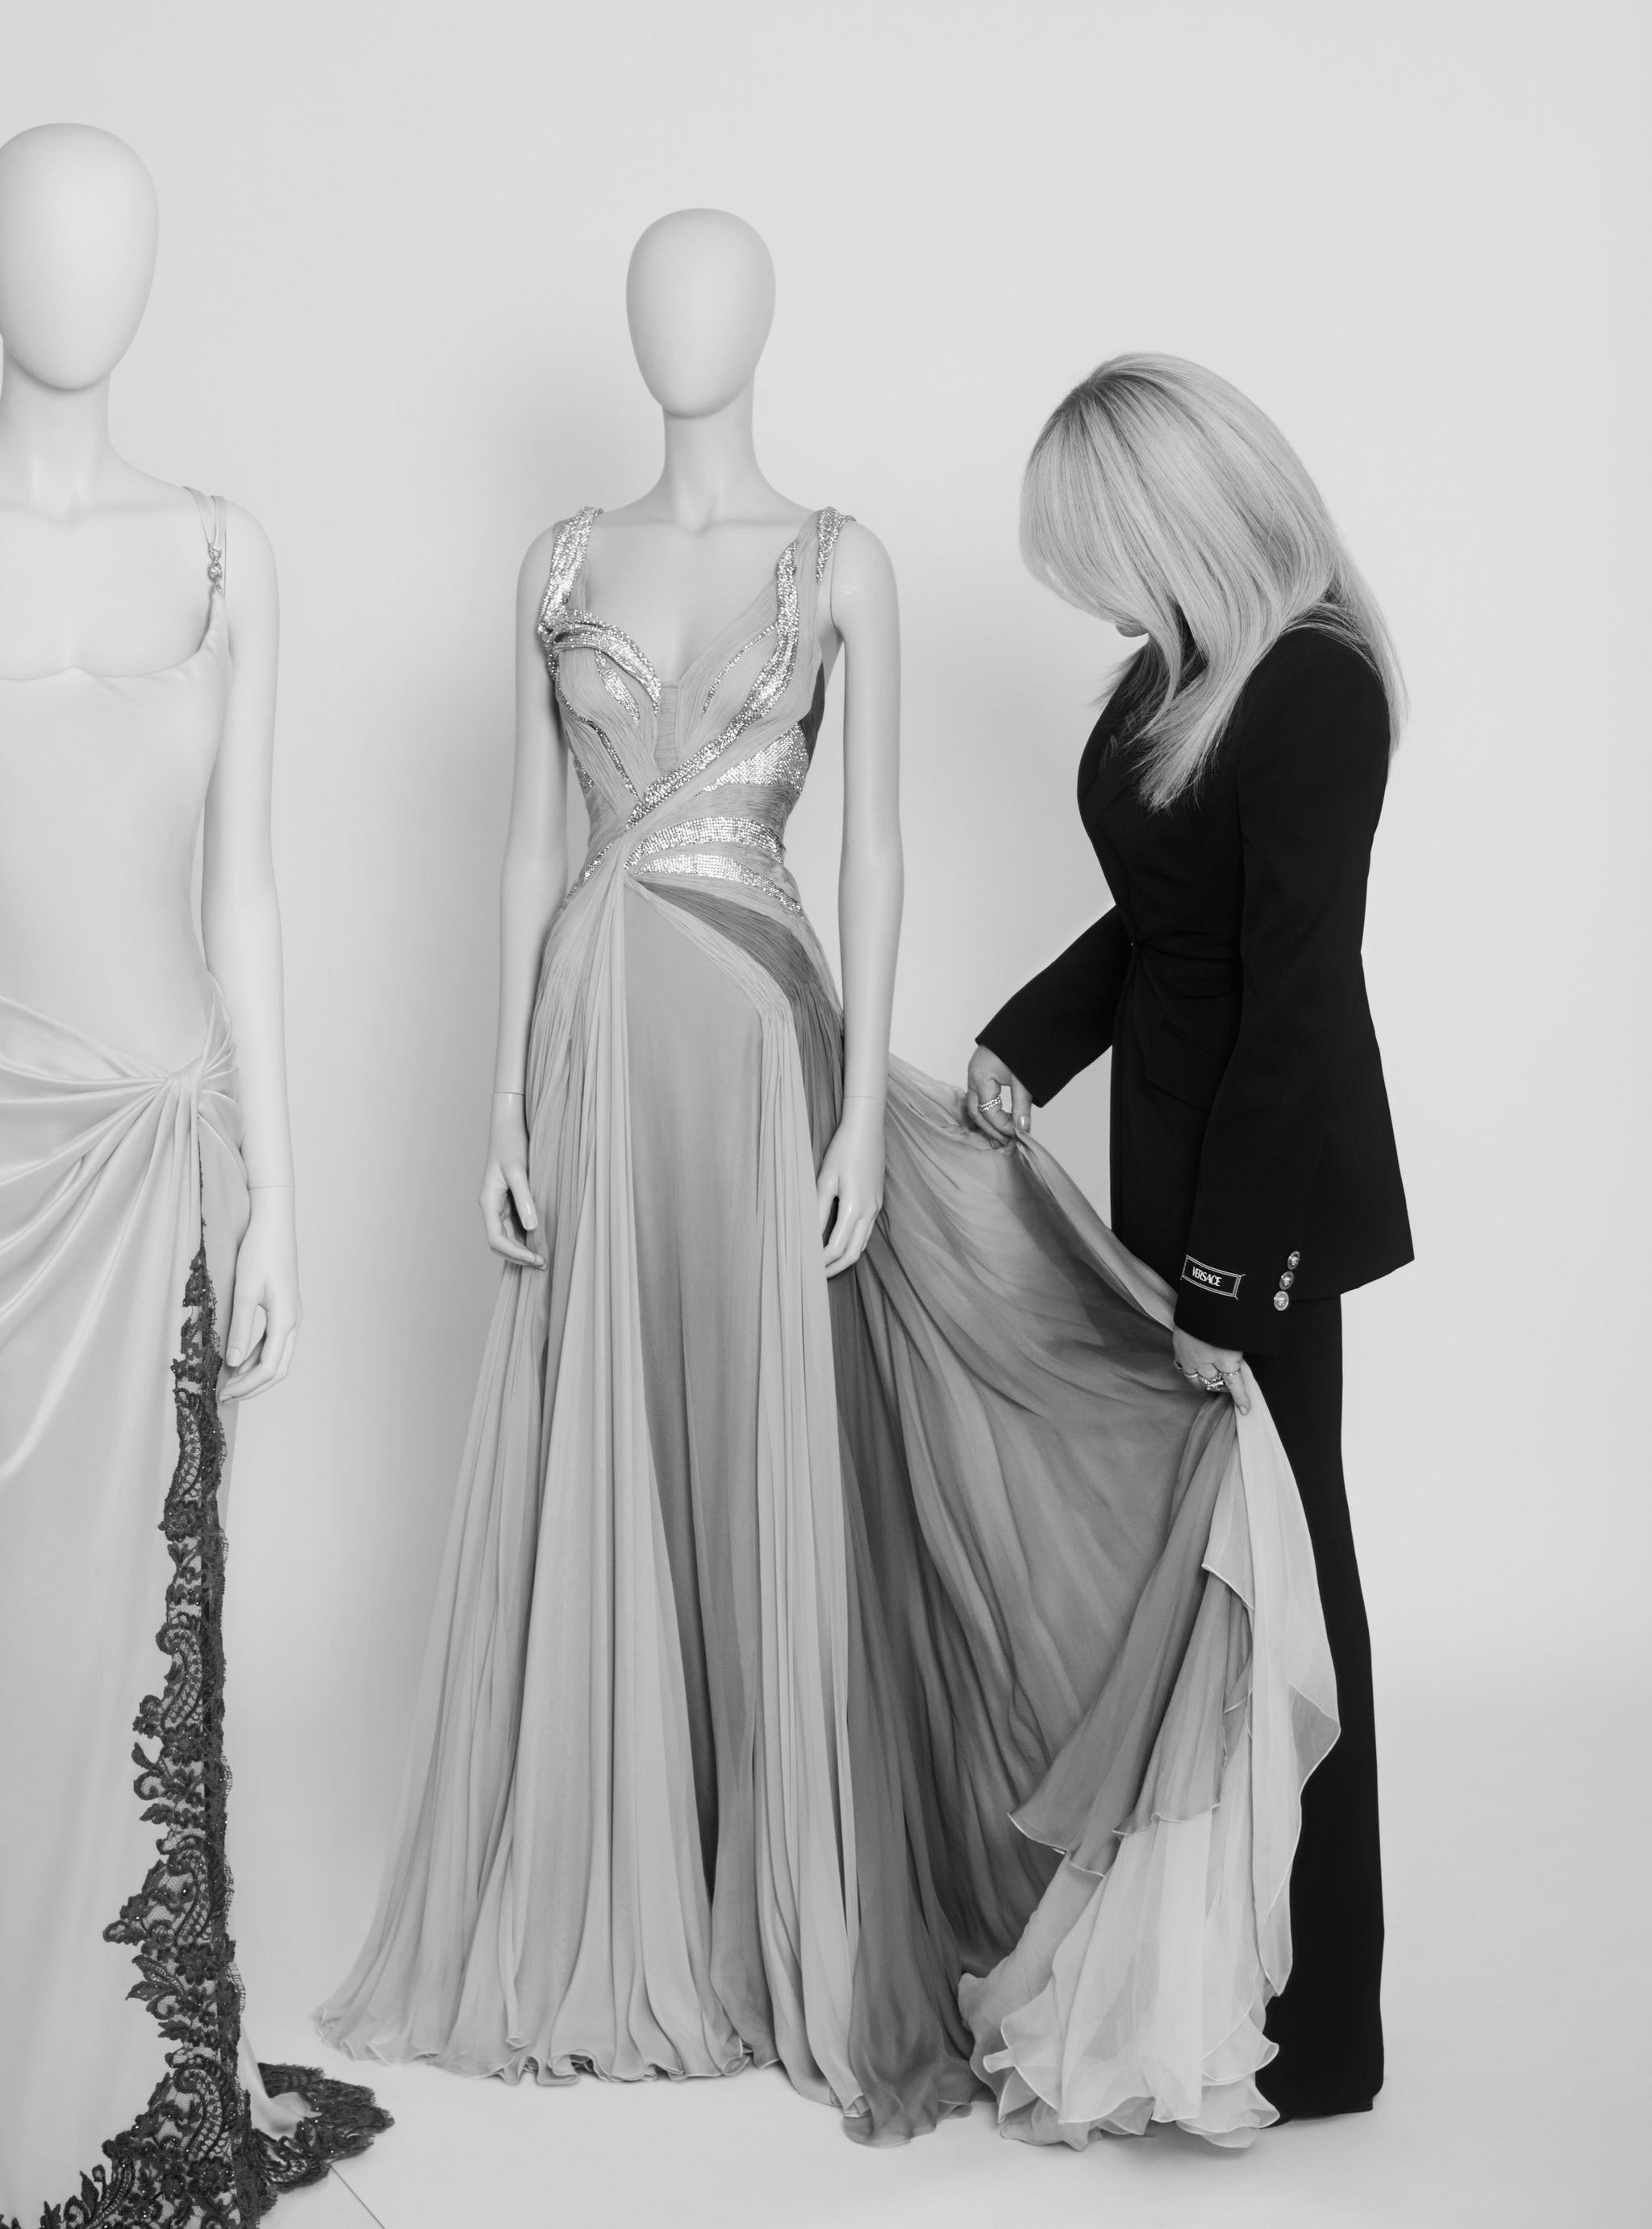 Gianni Versace × Donatella Versace (The Hottest Dress Ever